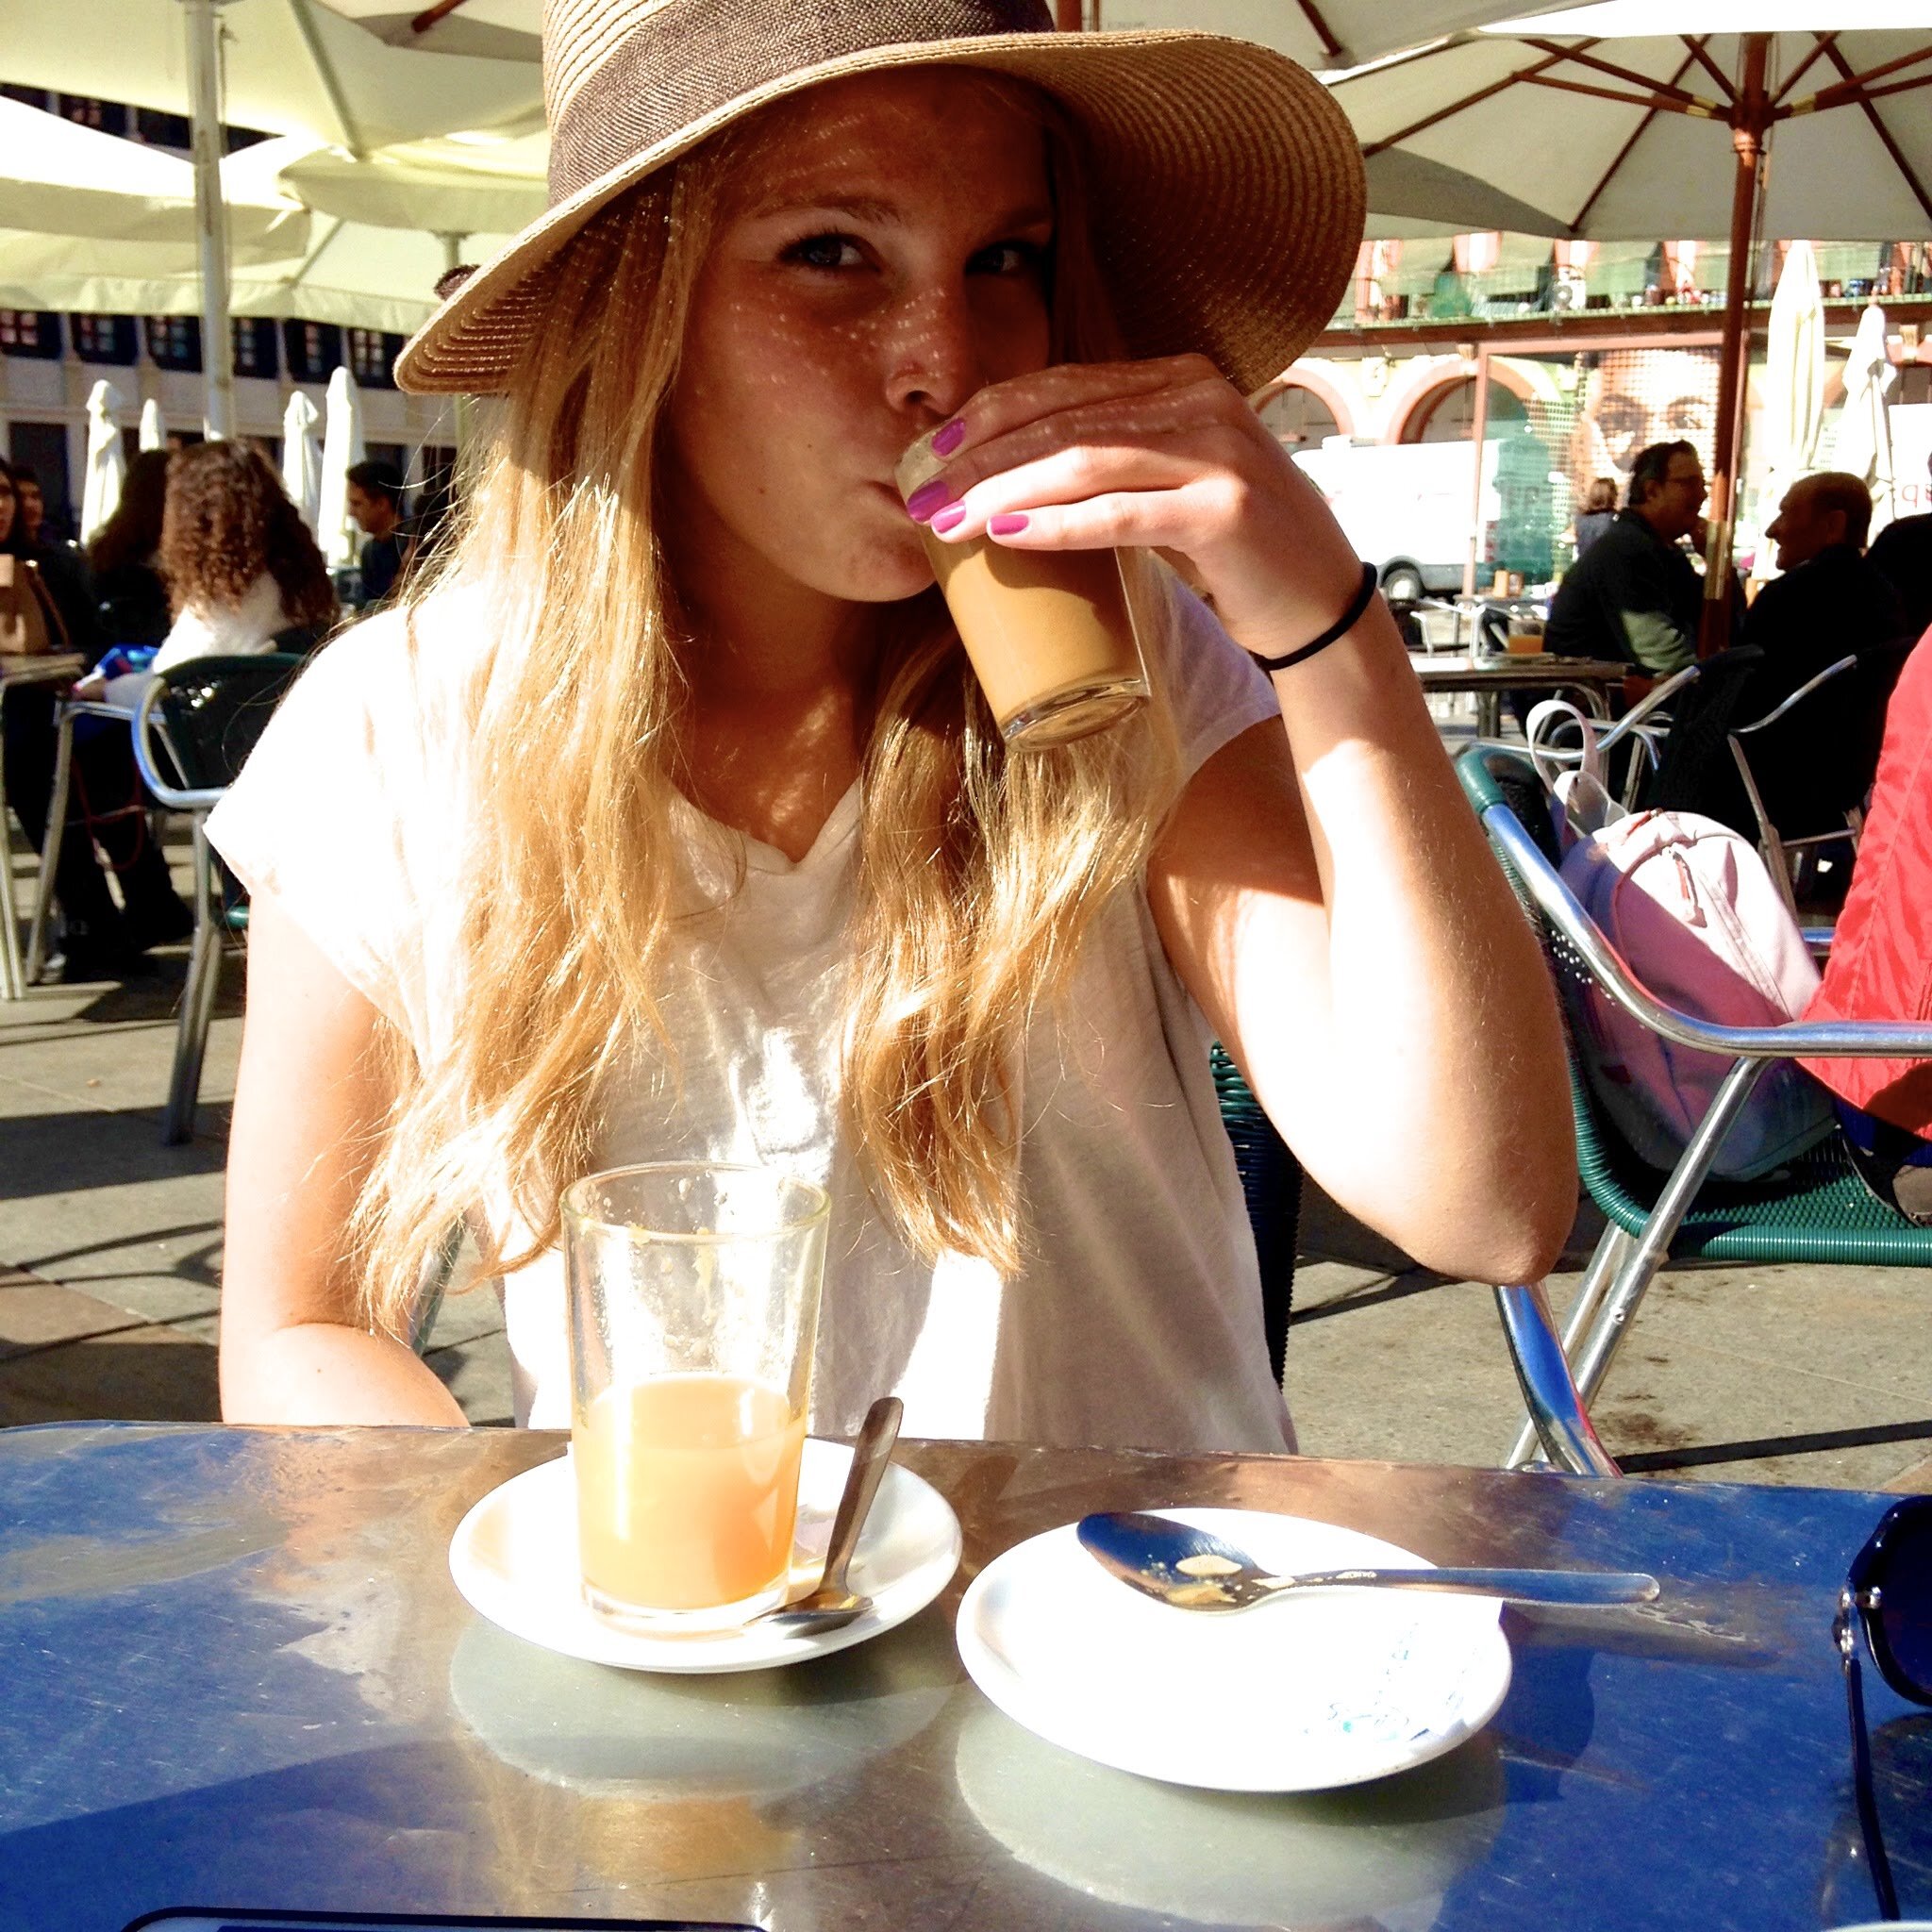 Monika drinking café con leche in Spain